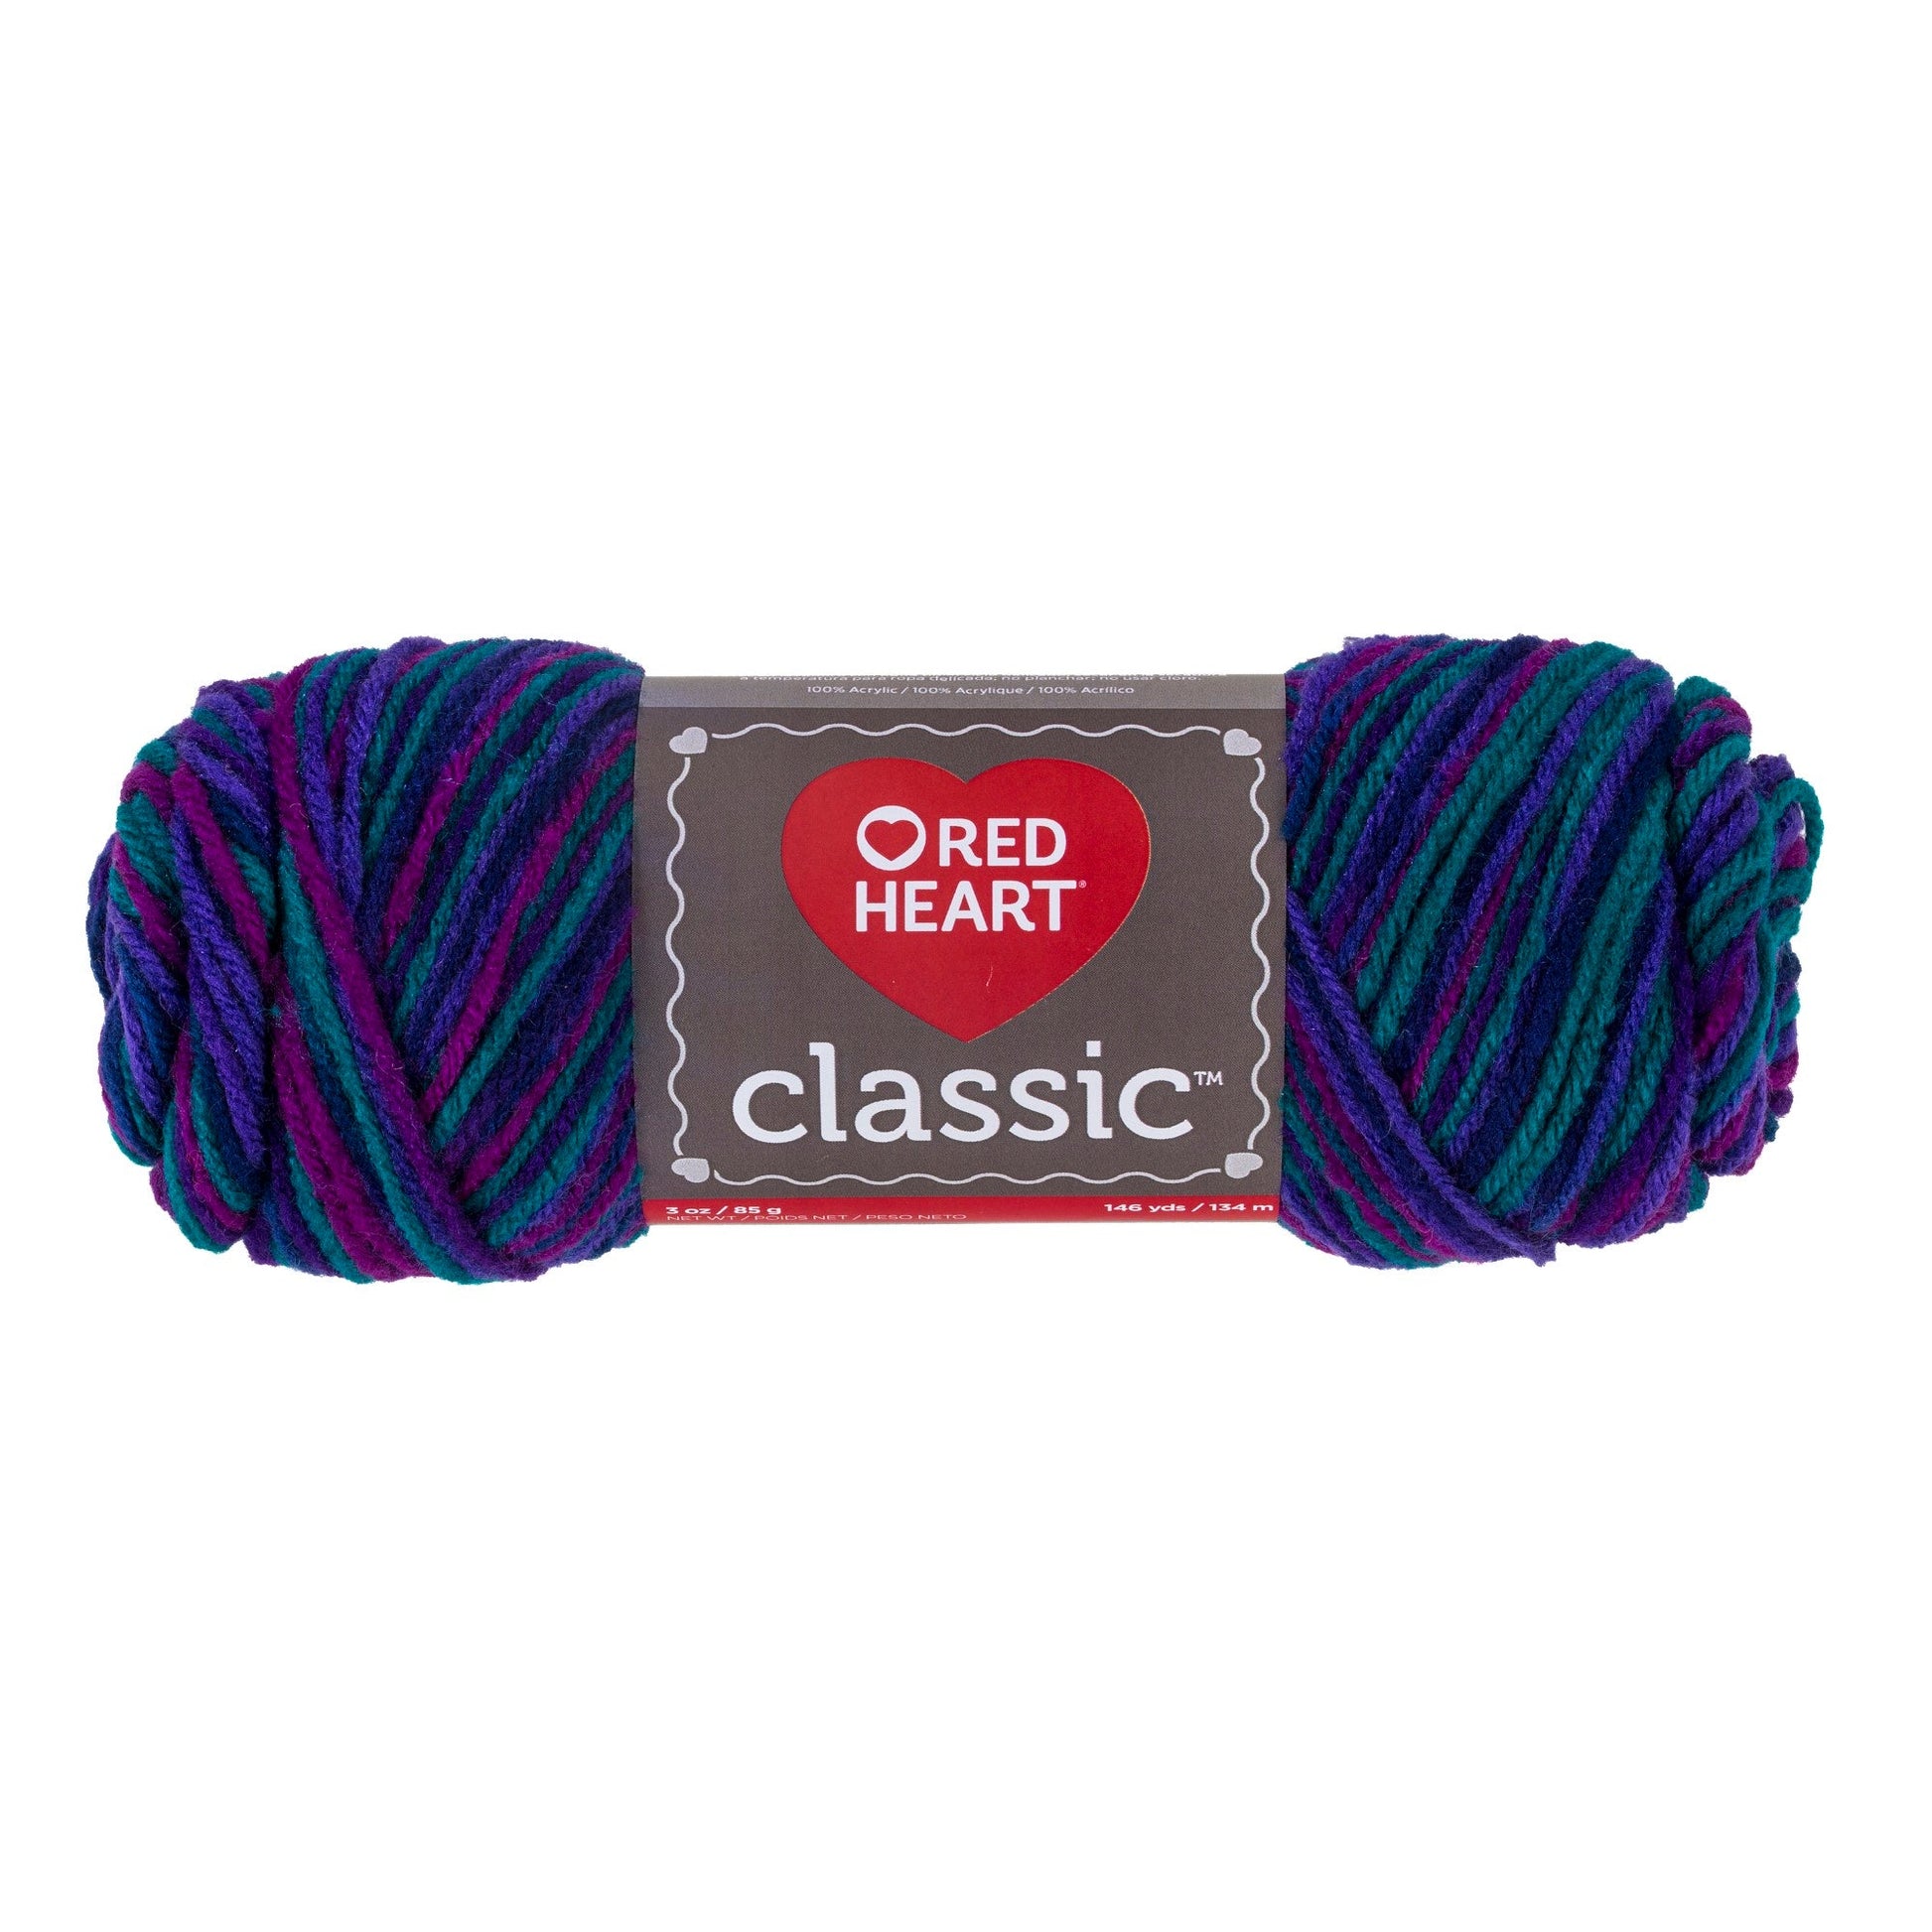 Red Heart Classic Yarn - Clearance shades Gemstone